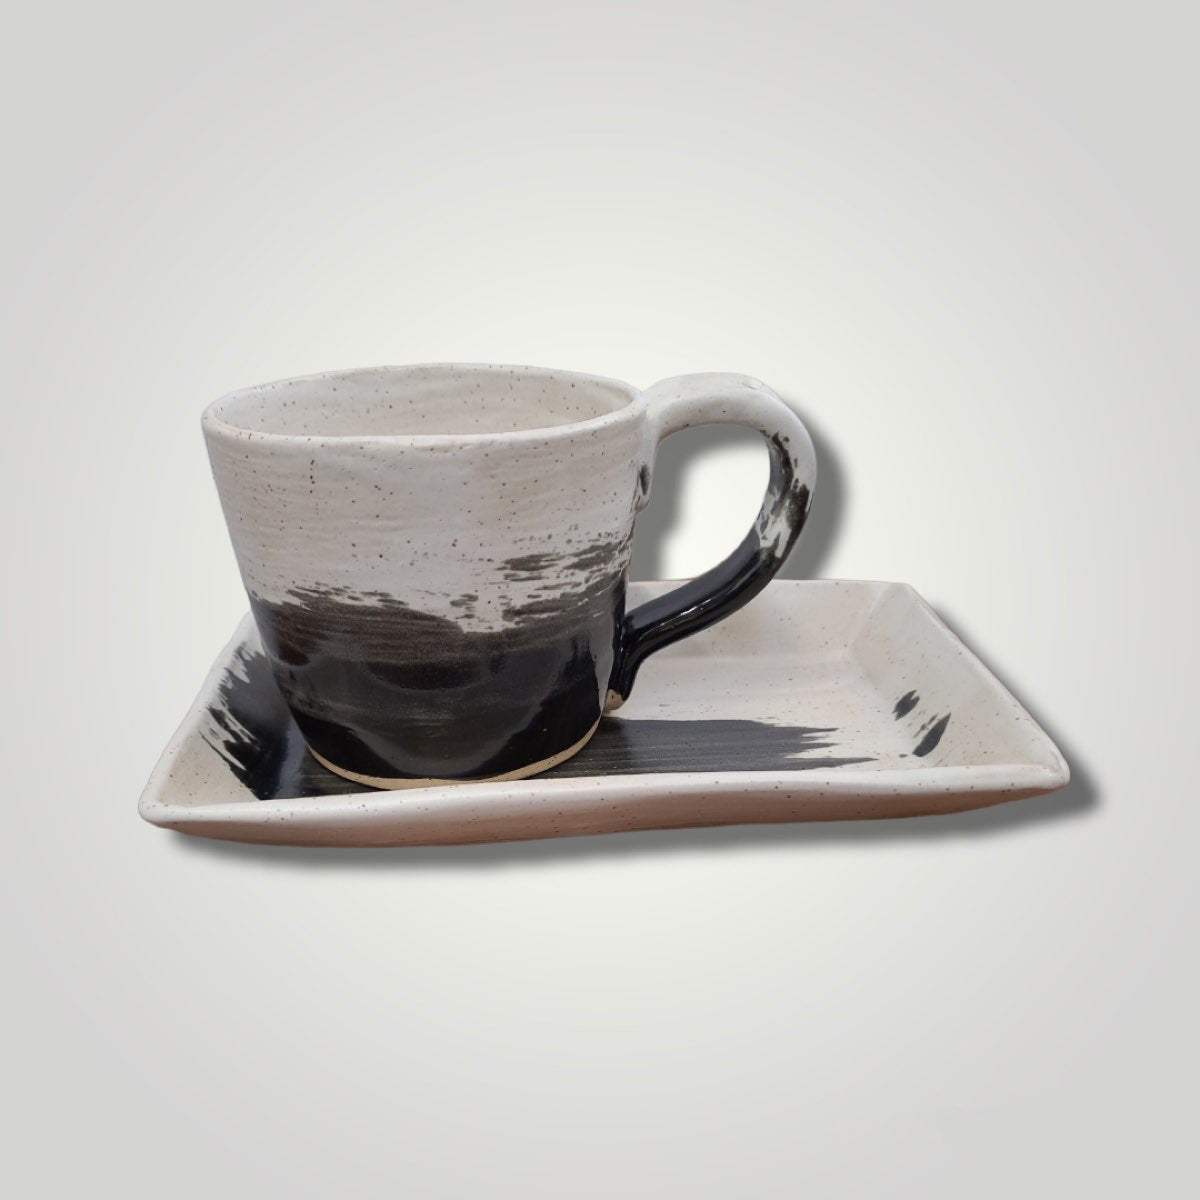 Café Set - Speckle Stoneware - Erin White